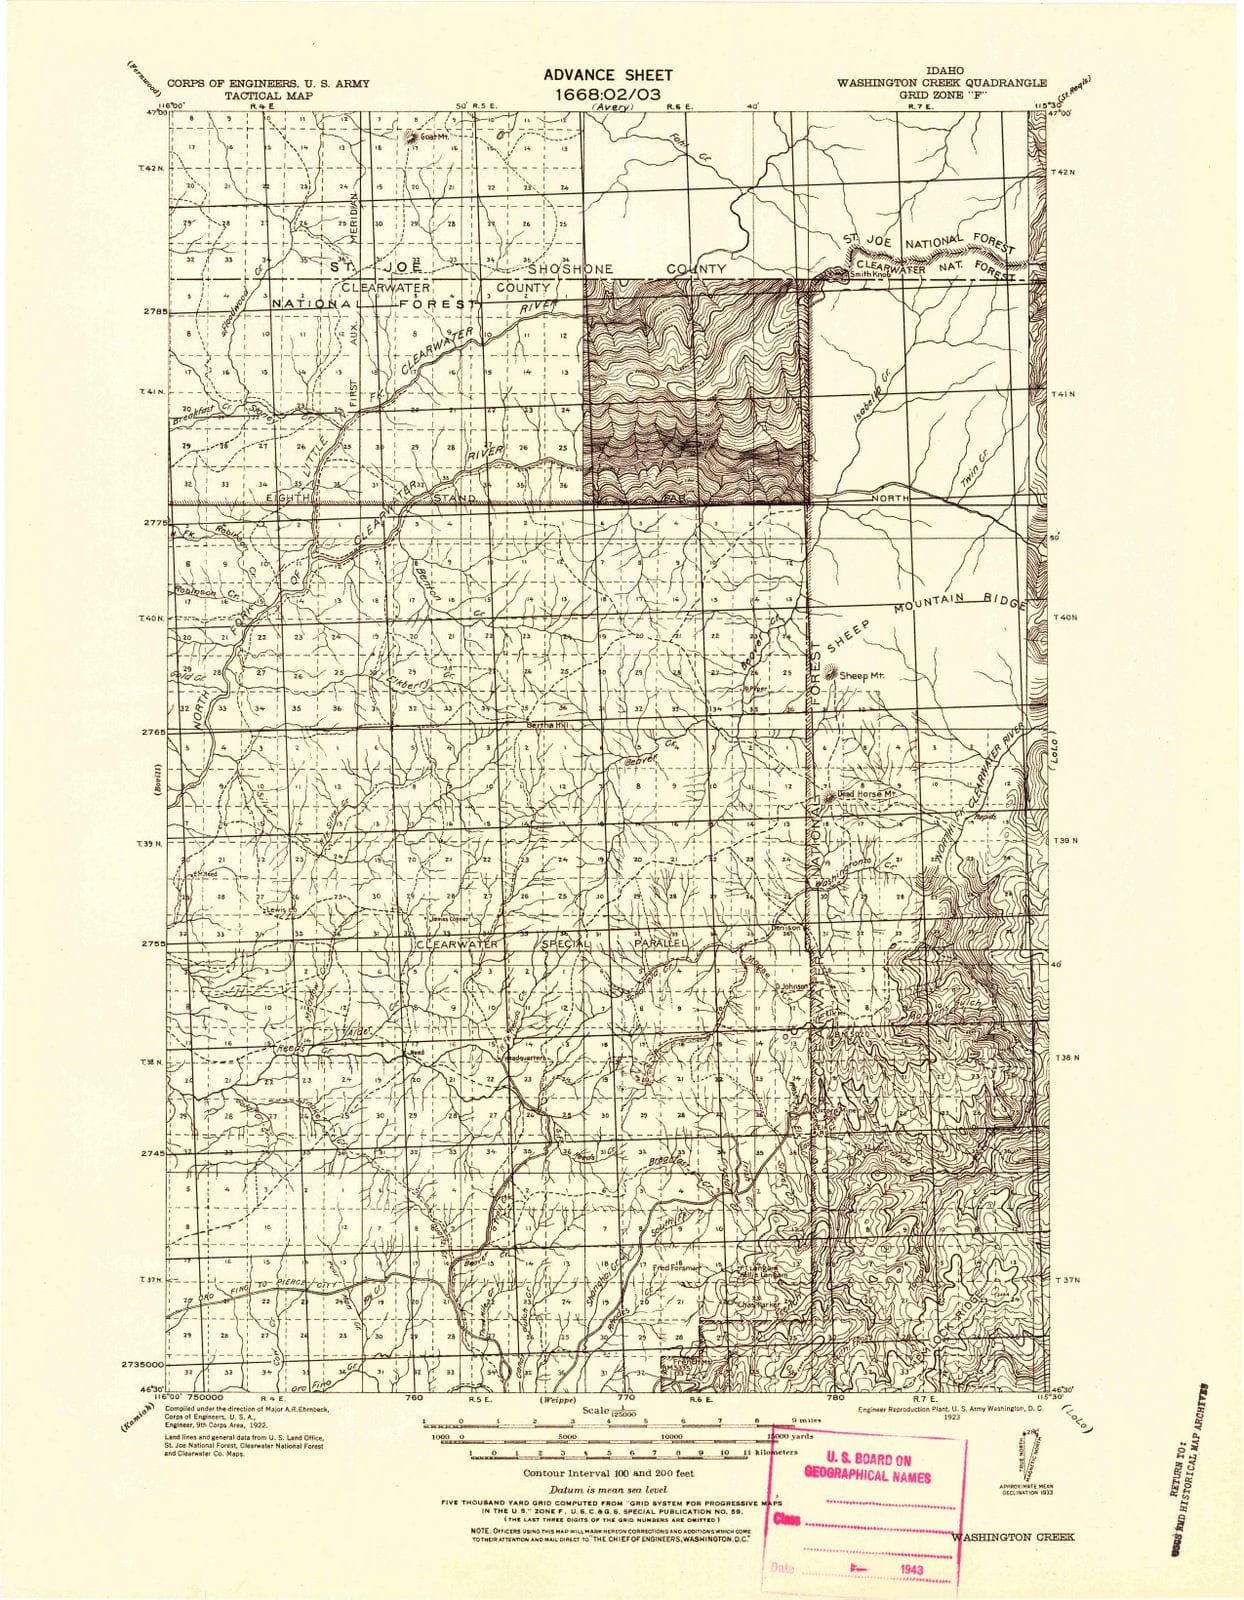 1923 Washington Creek, ID - Idaho - USGS Topographic Map